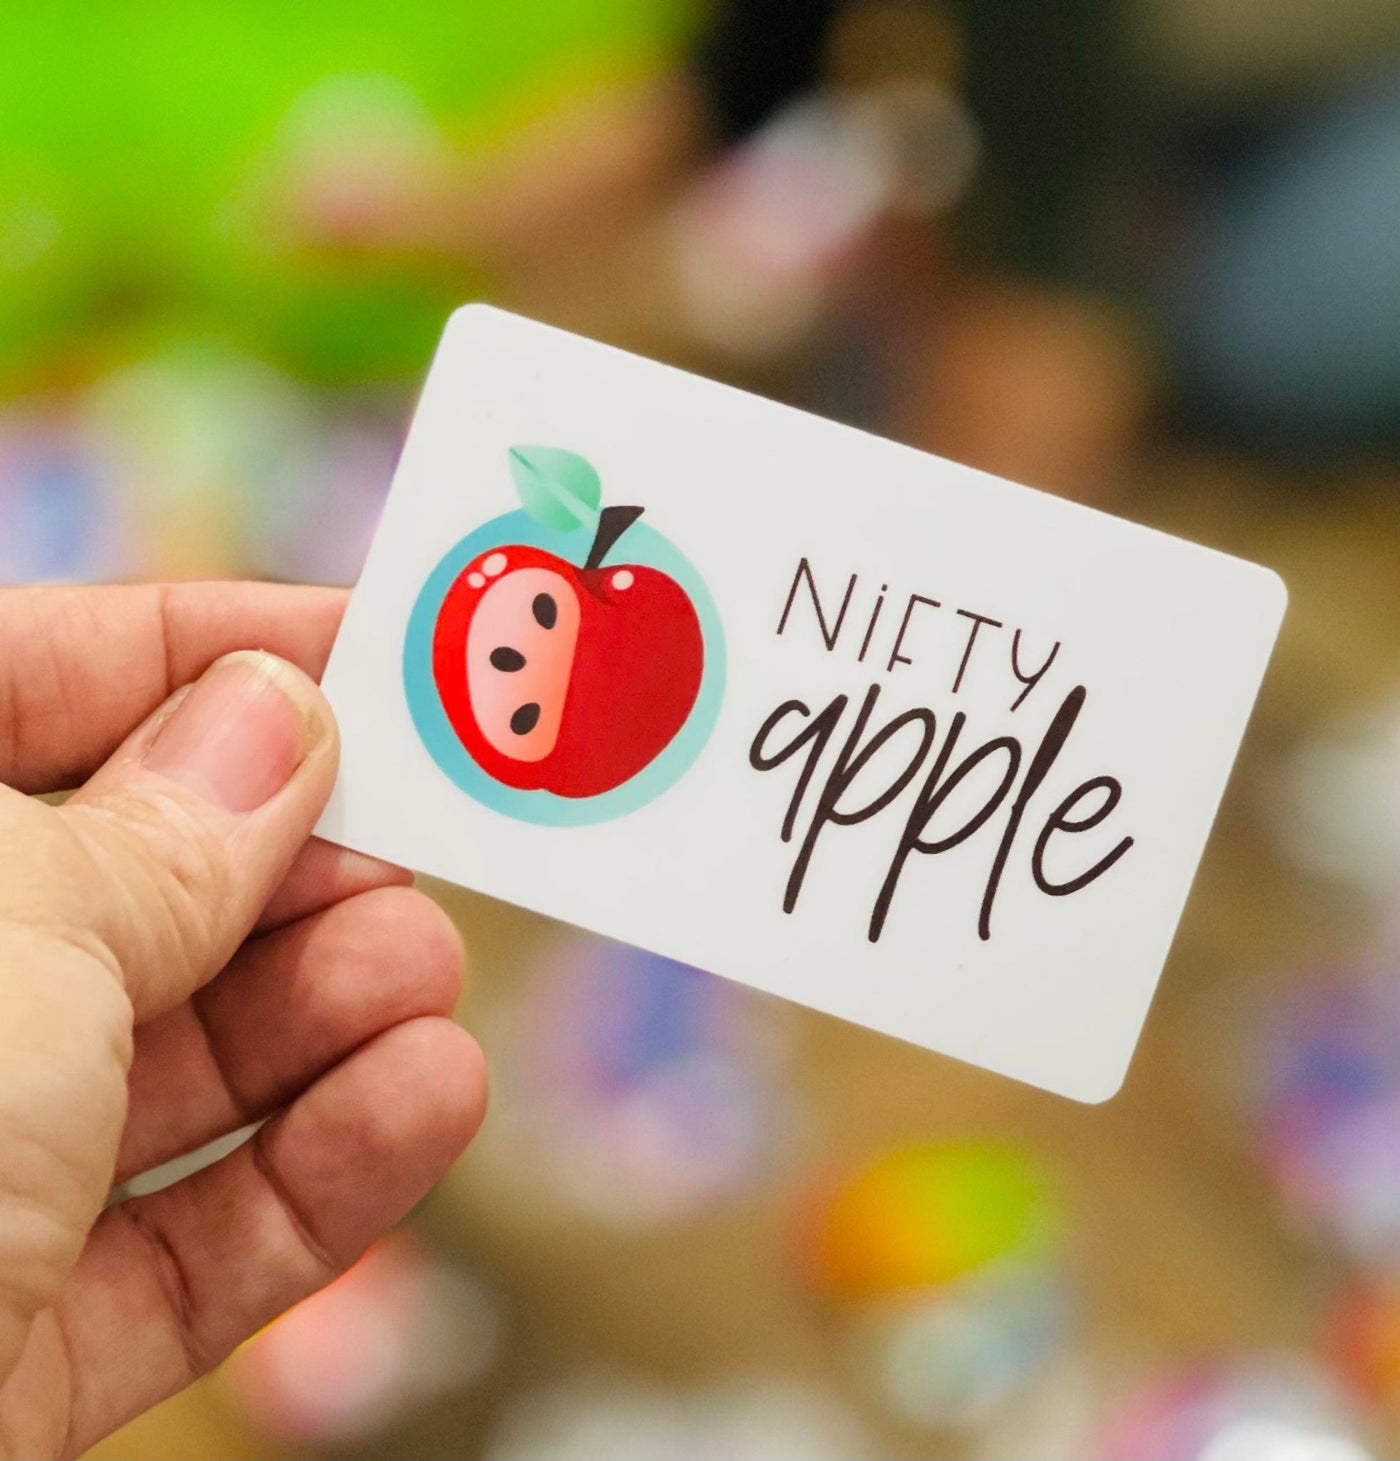 Nifty Apple Gift Card